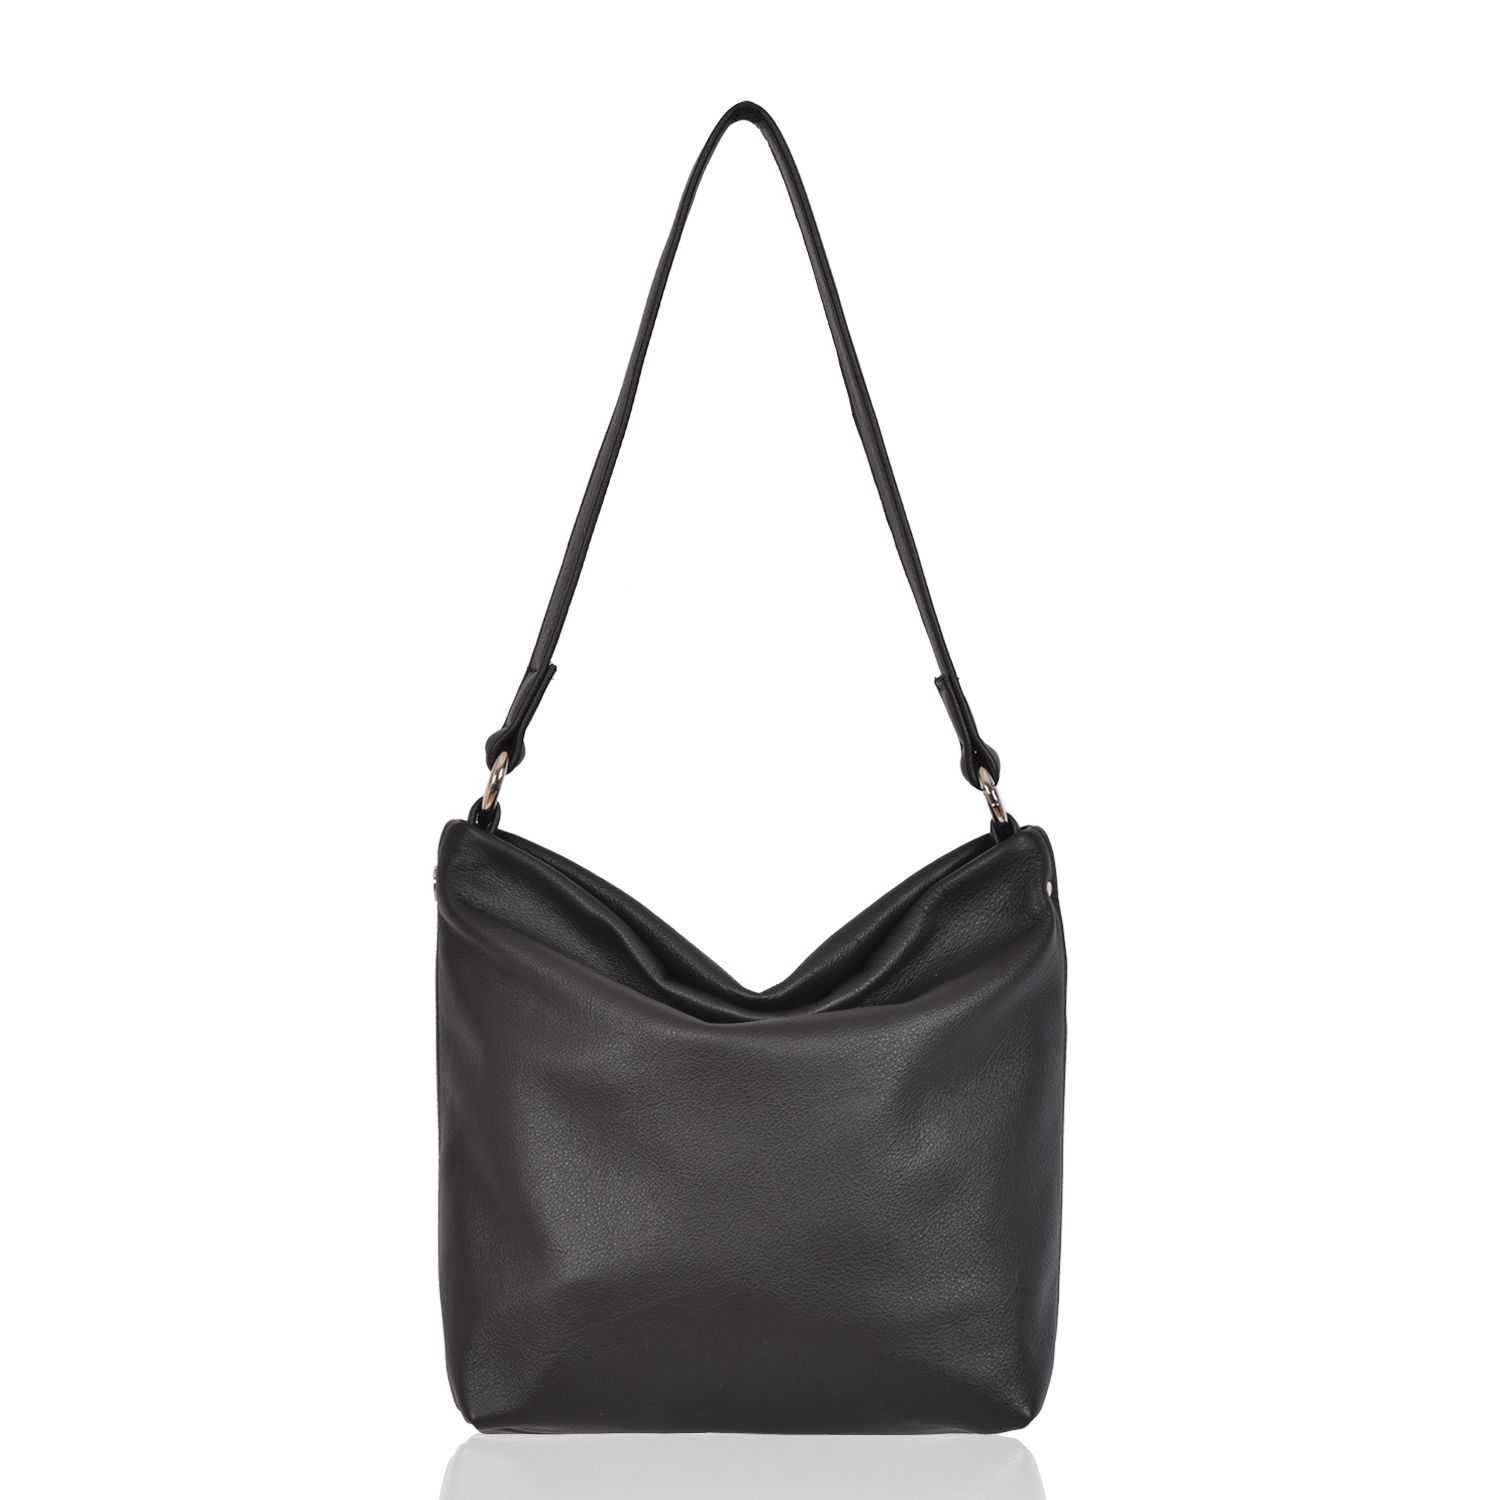 Leather Shoulder Bag Black | Cookie by Owen Barry - Owen Barry